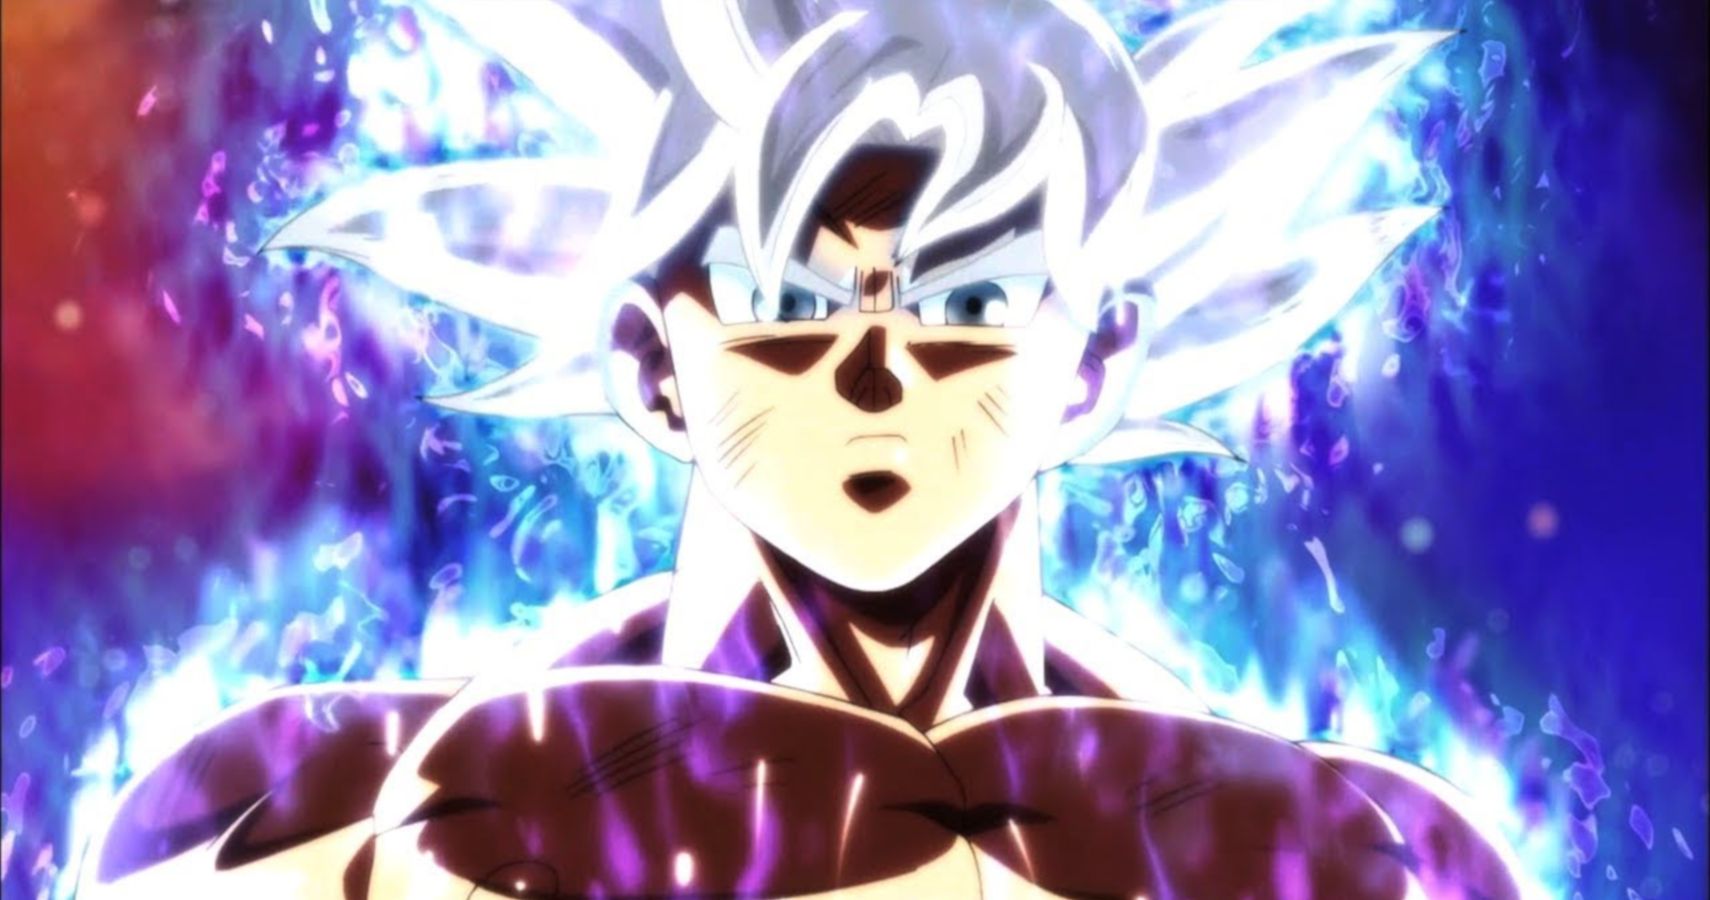 Does Goku's Ultra Instinct Form Make Him Unkillable?